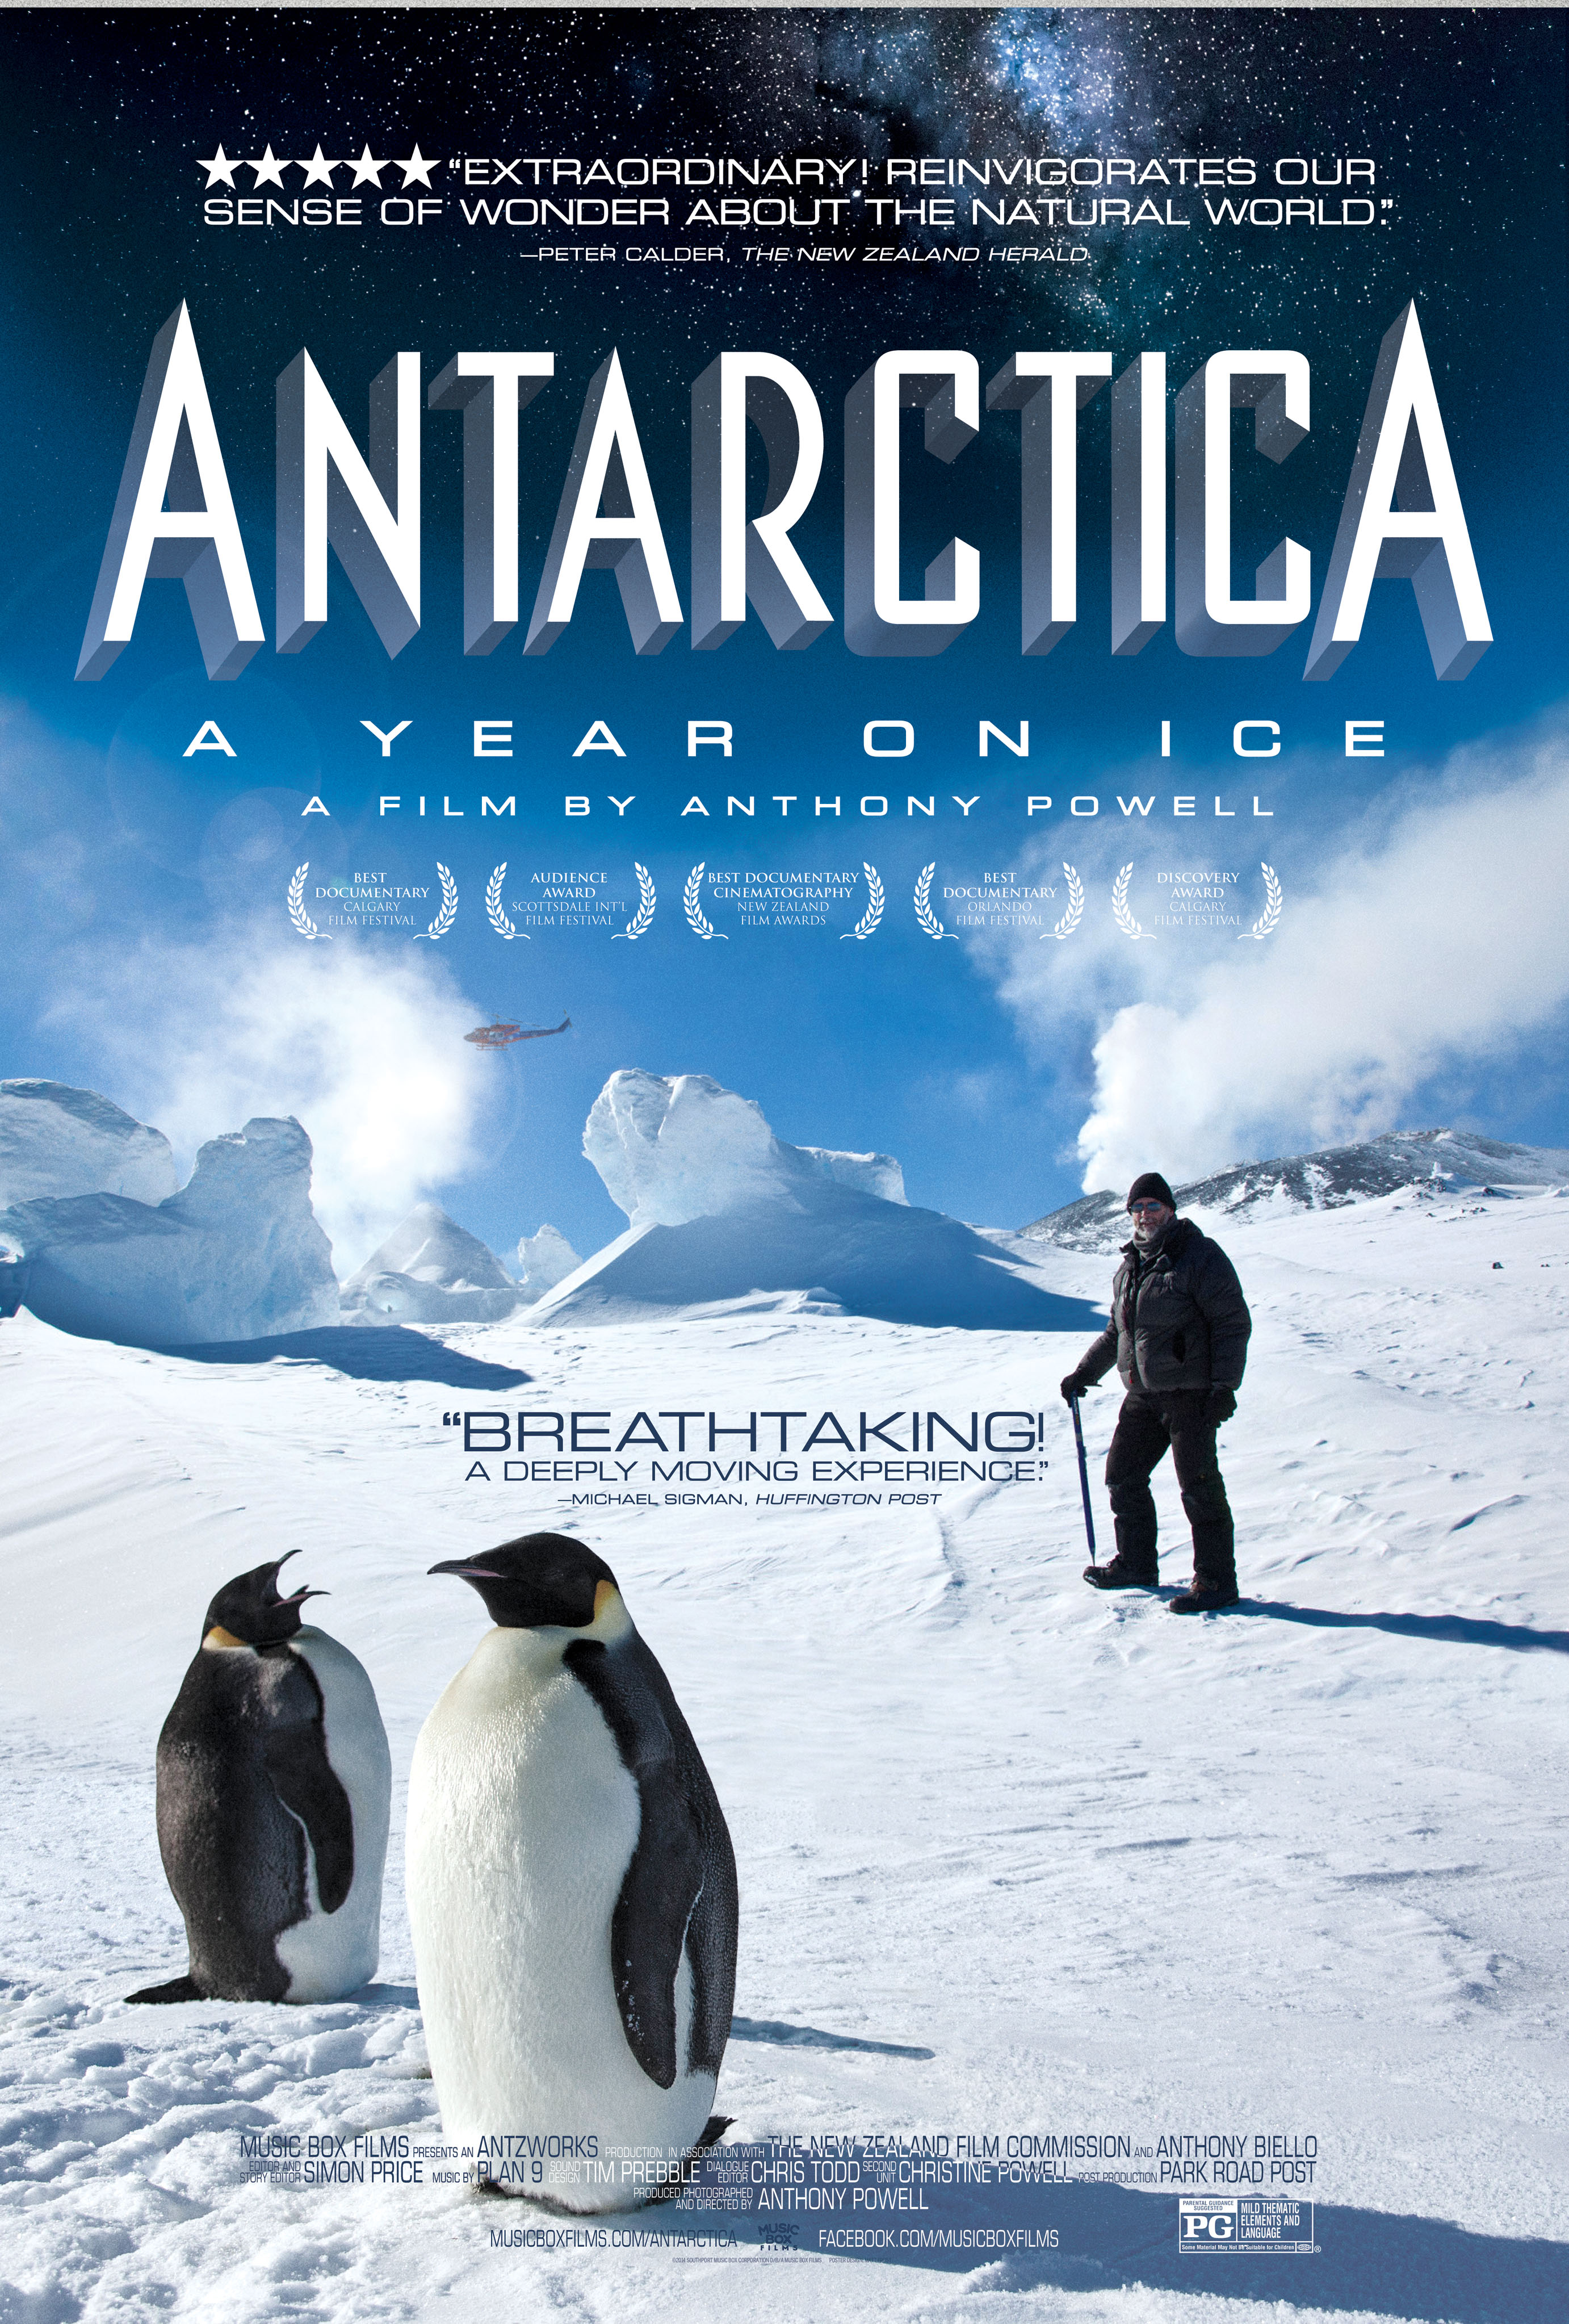 Nonton film Antarctica: A Year On Ice layarkaca21 indoxx1 ganool online streaming terbaru